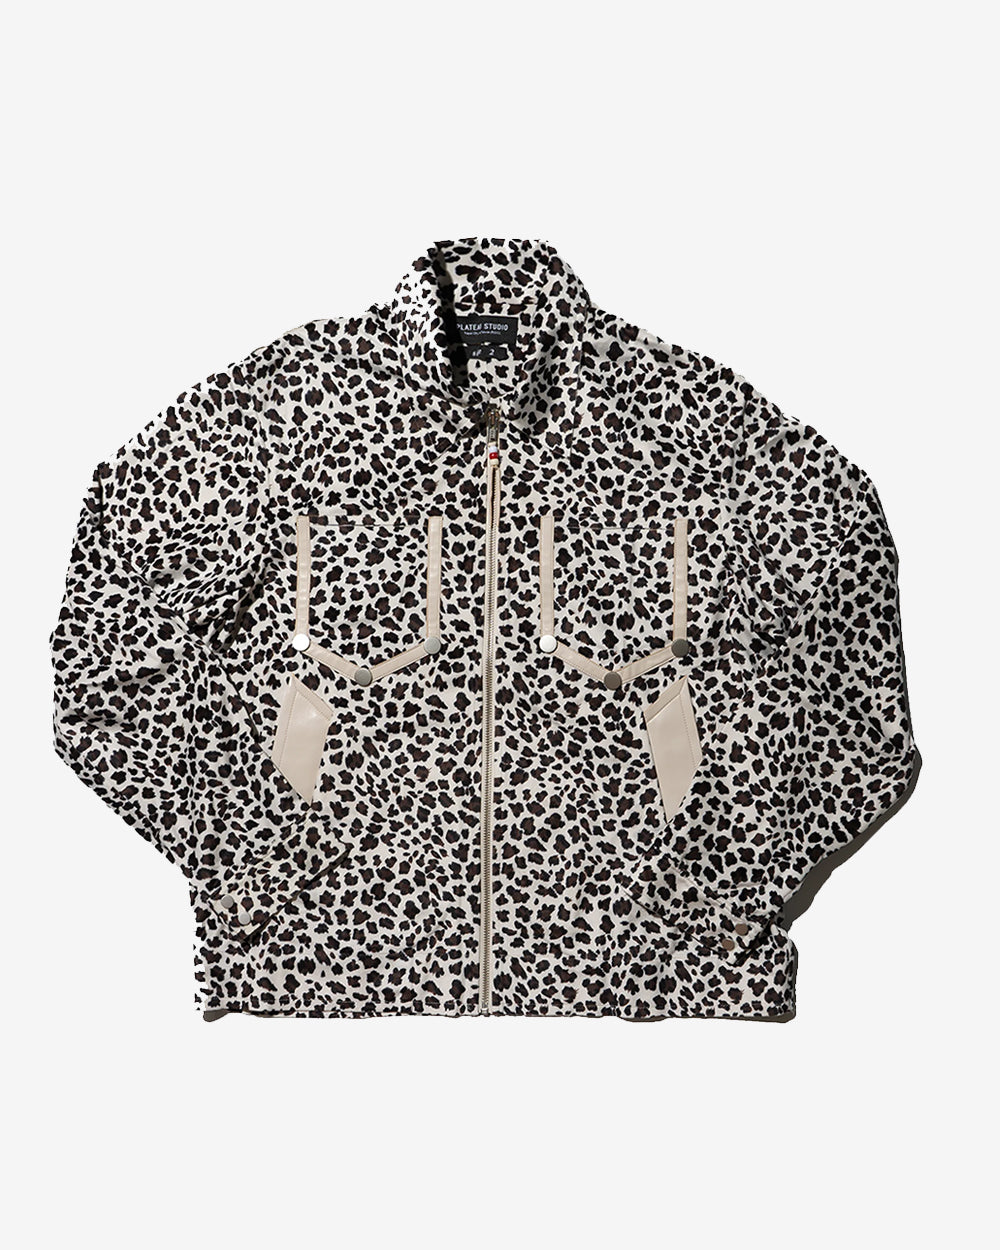 Leopard Zip Up Jacket Wht/Blk